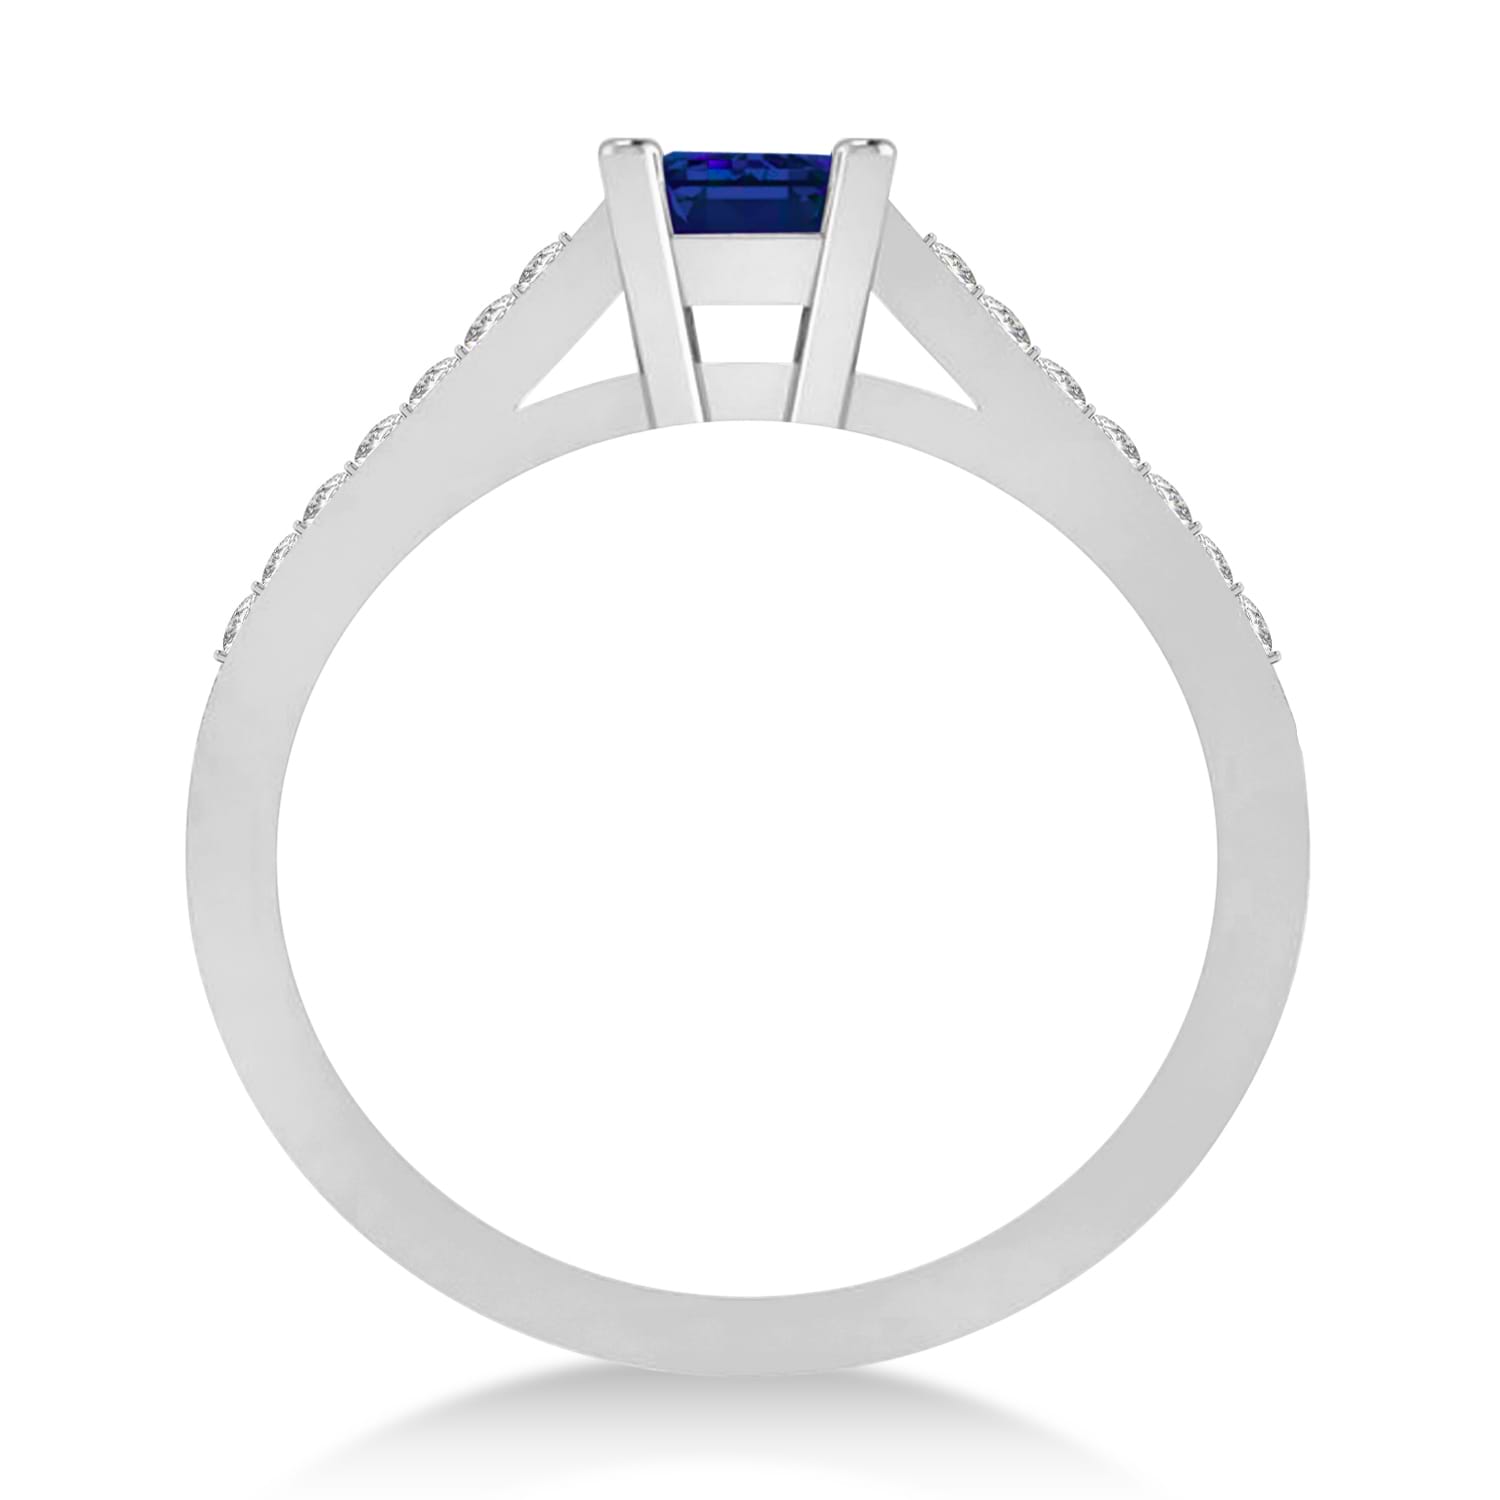 Blue Sapphire & Emerald-Cut Diamond Pre-Set Engagement Ring 14k White Gold (1.09ct)